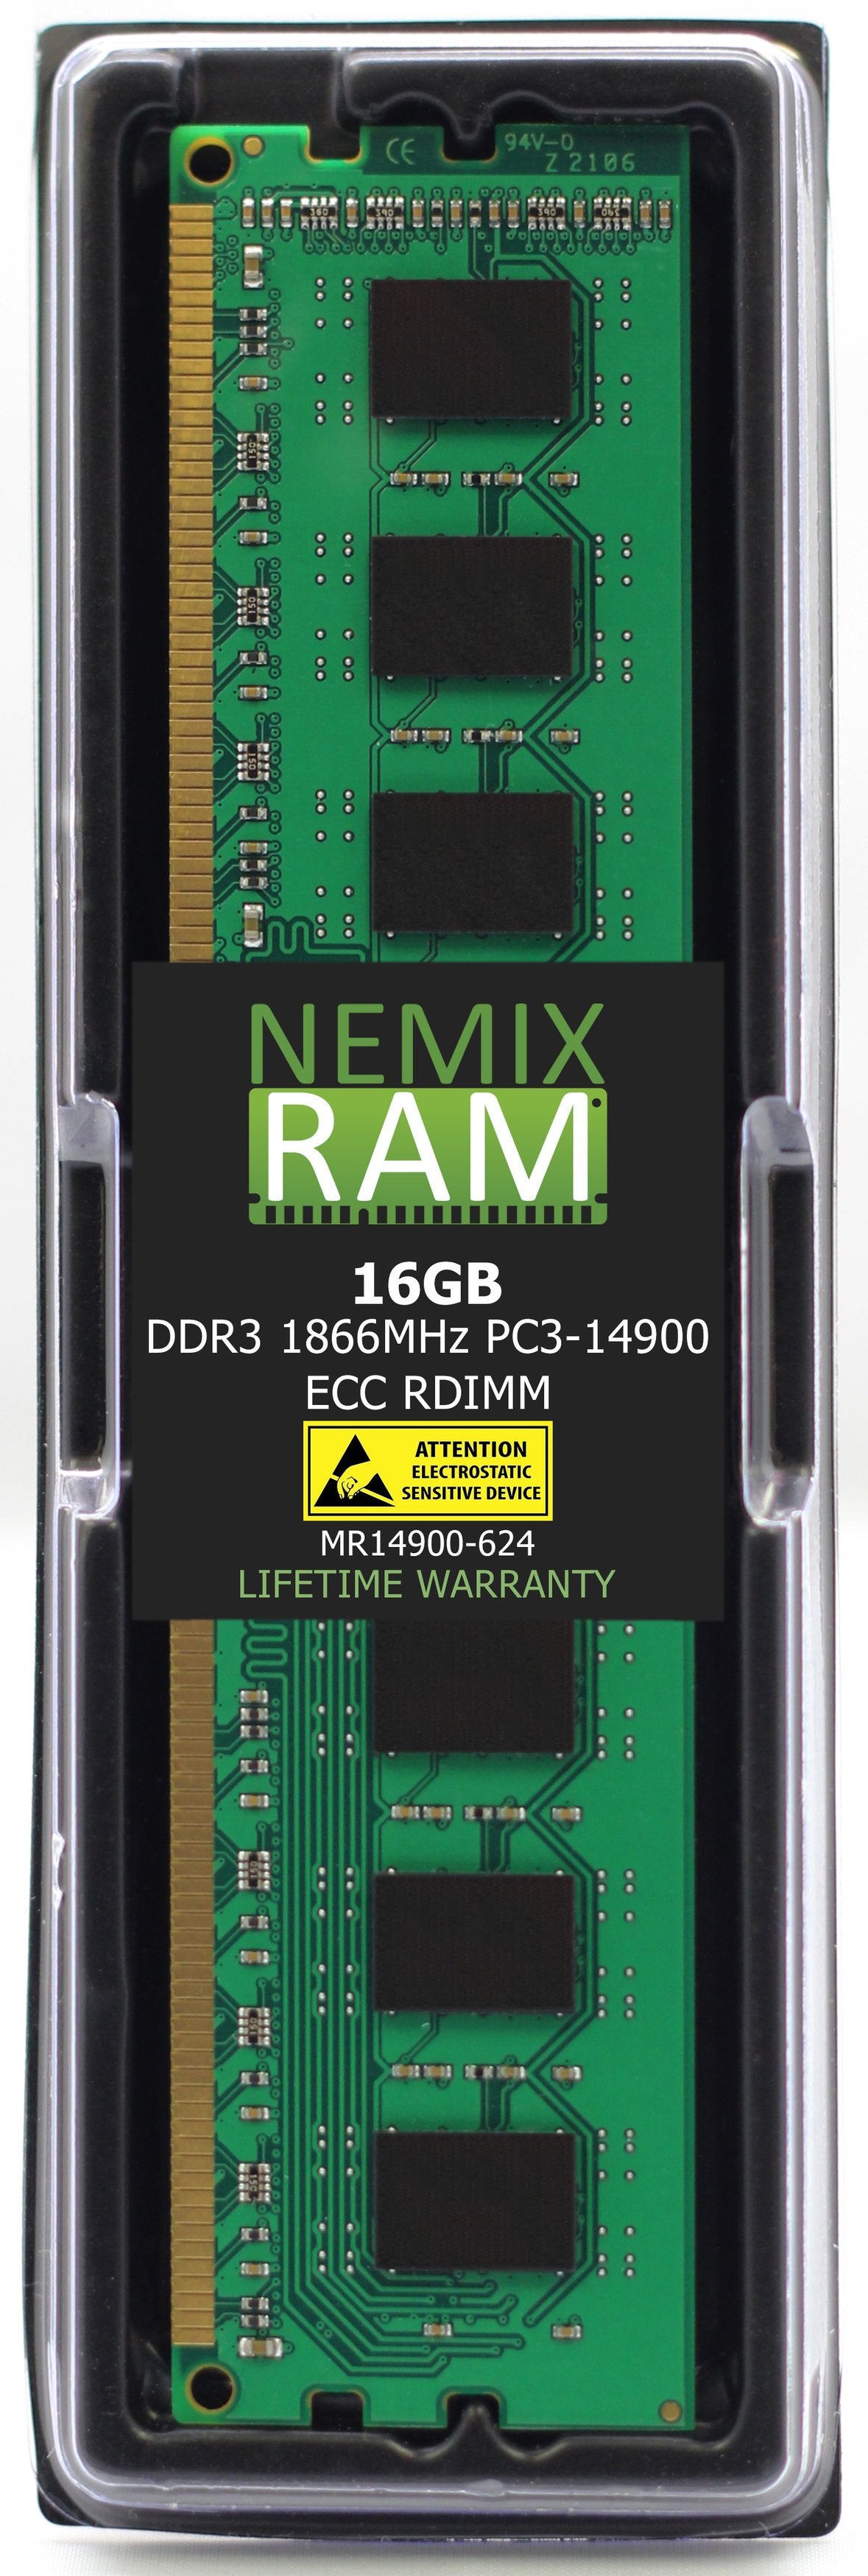 16GB DDR3 1866MHZ PC3-14900 RDIMM Compatible with SUPERMICRO MEM-DR316L-HL01-ER18